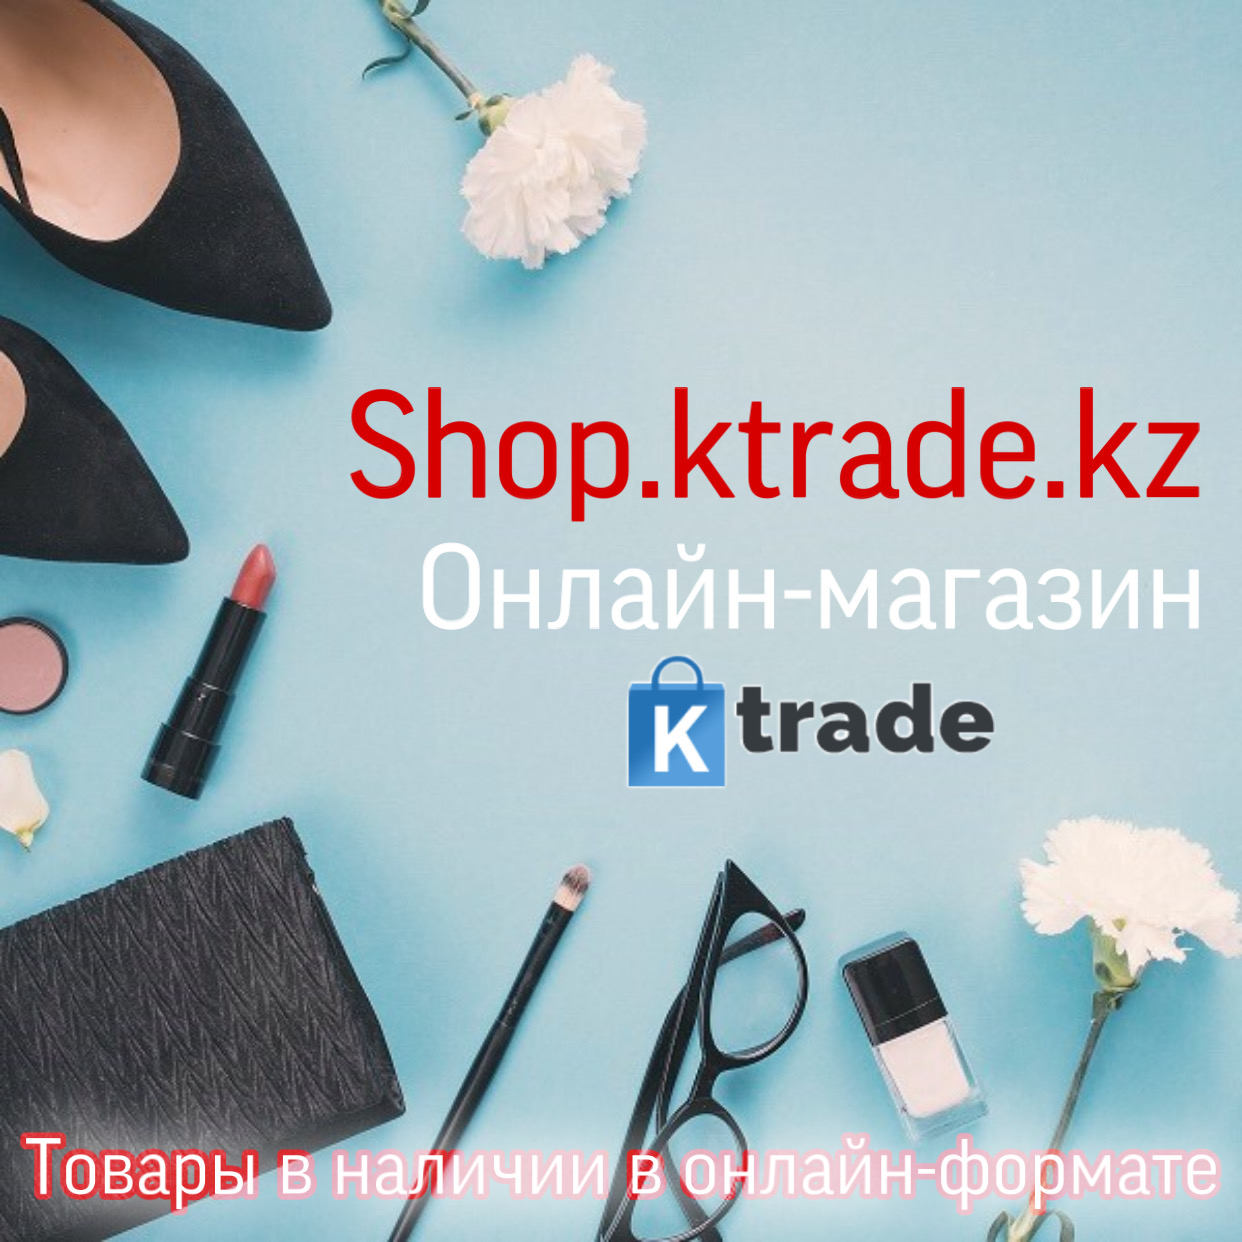 Shop_ktrade